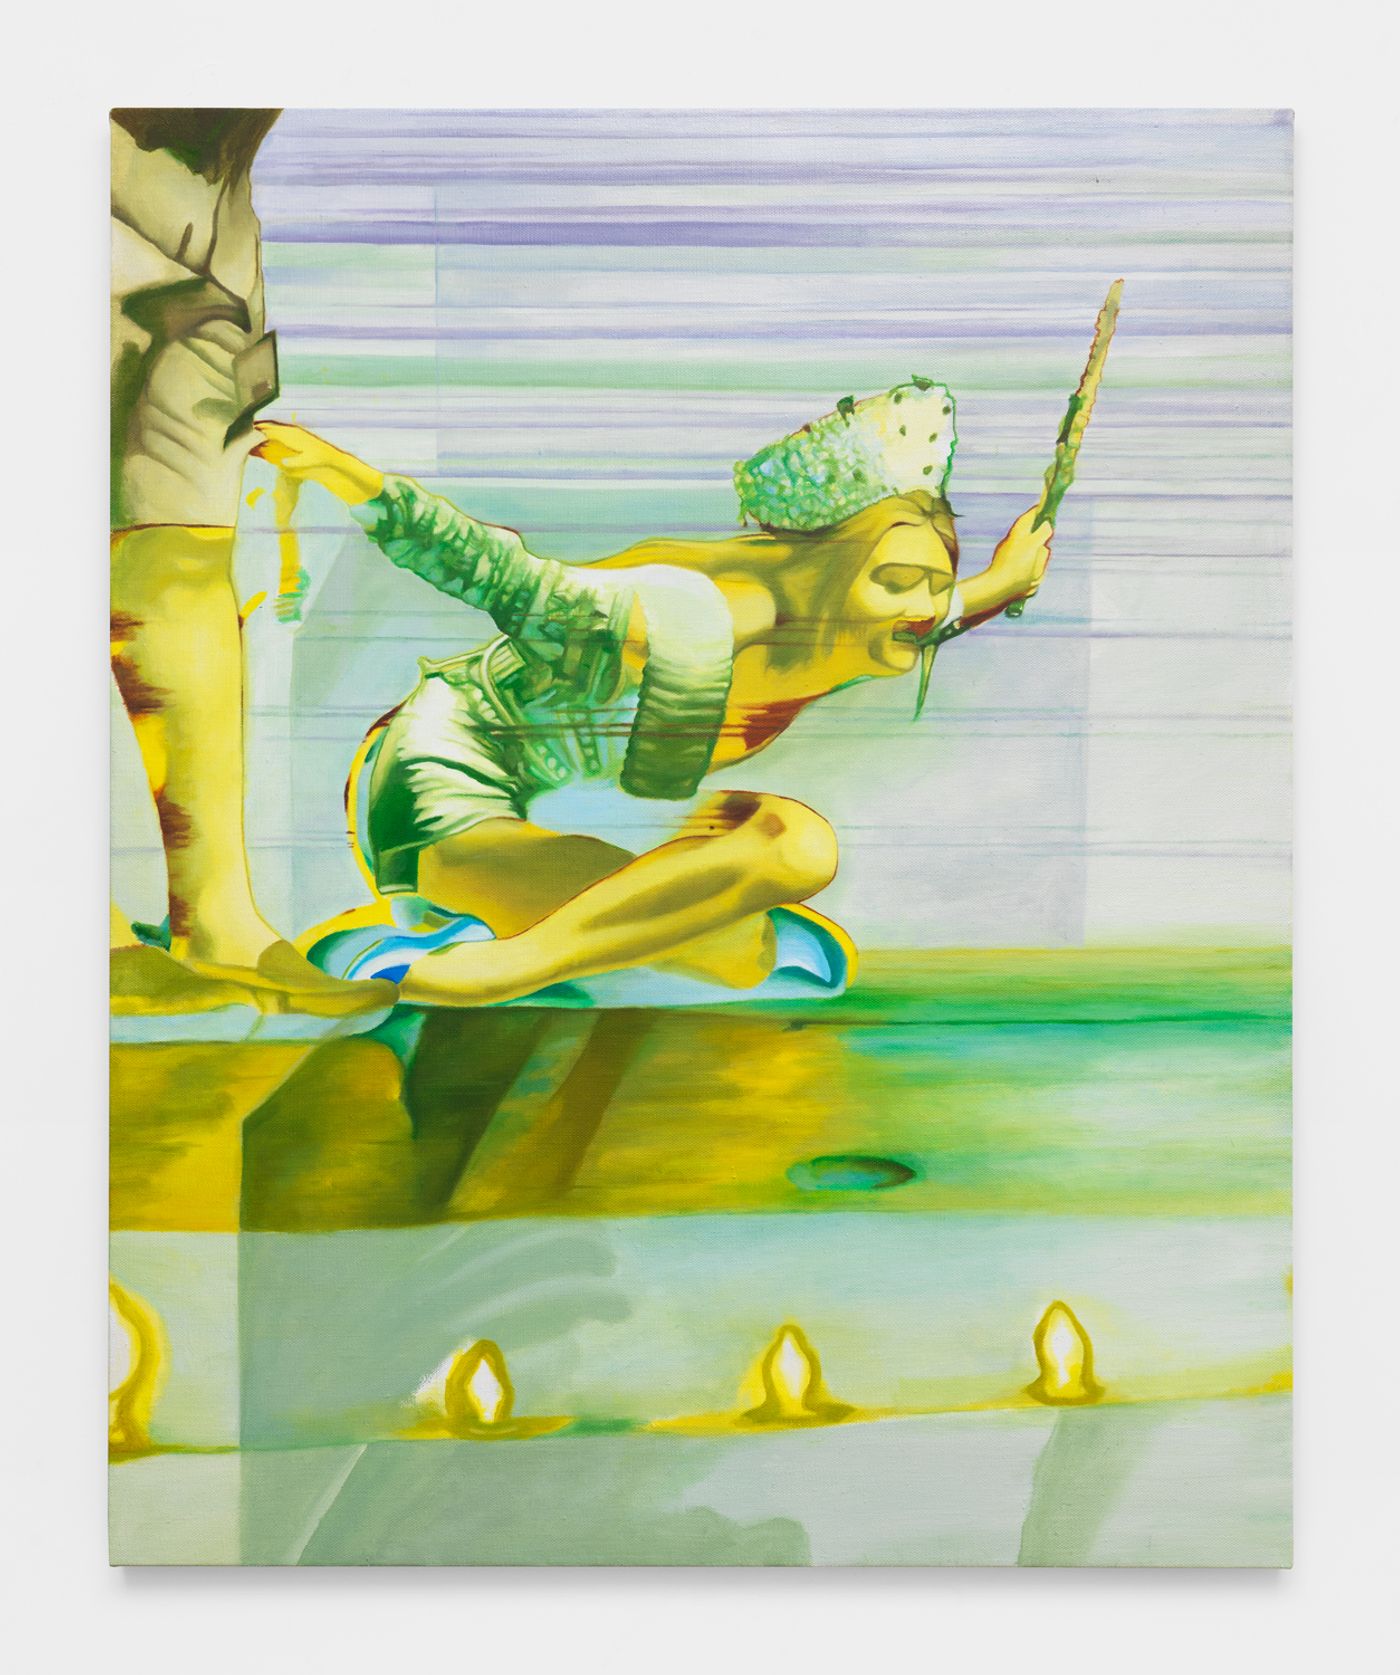 Marika Thunder, Cotillion #2, 2021. Oil on canvas, 42 x 34 in (106.7 x 86.4 cm).